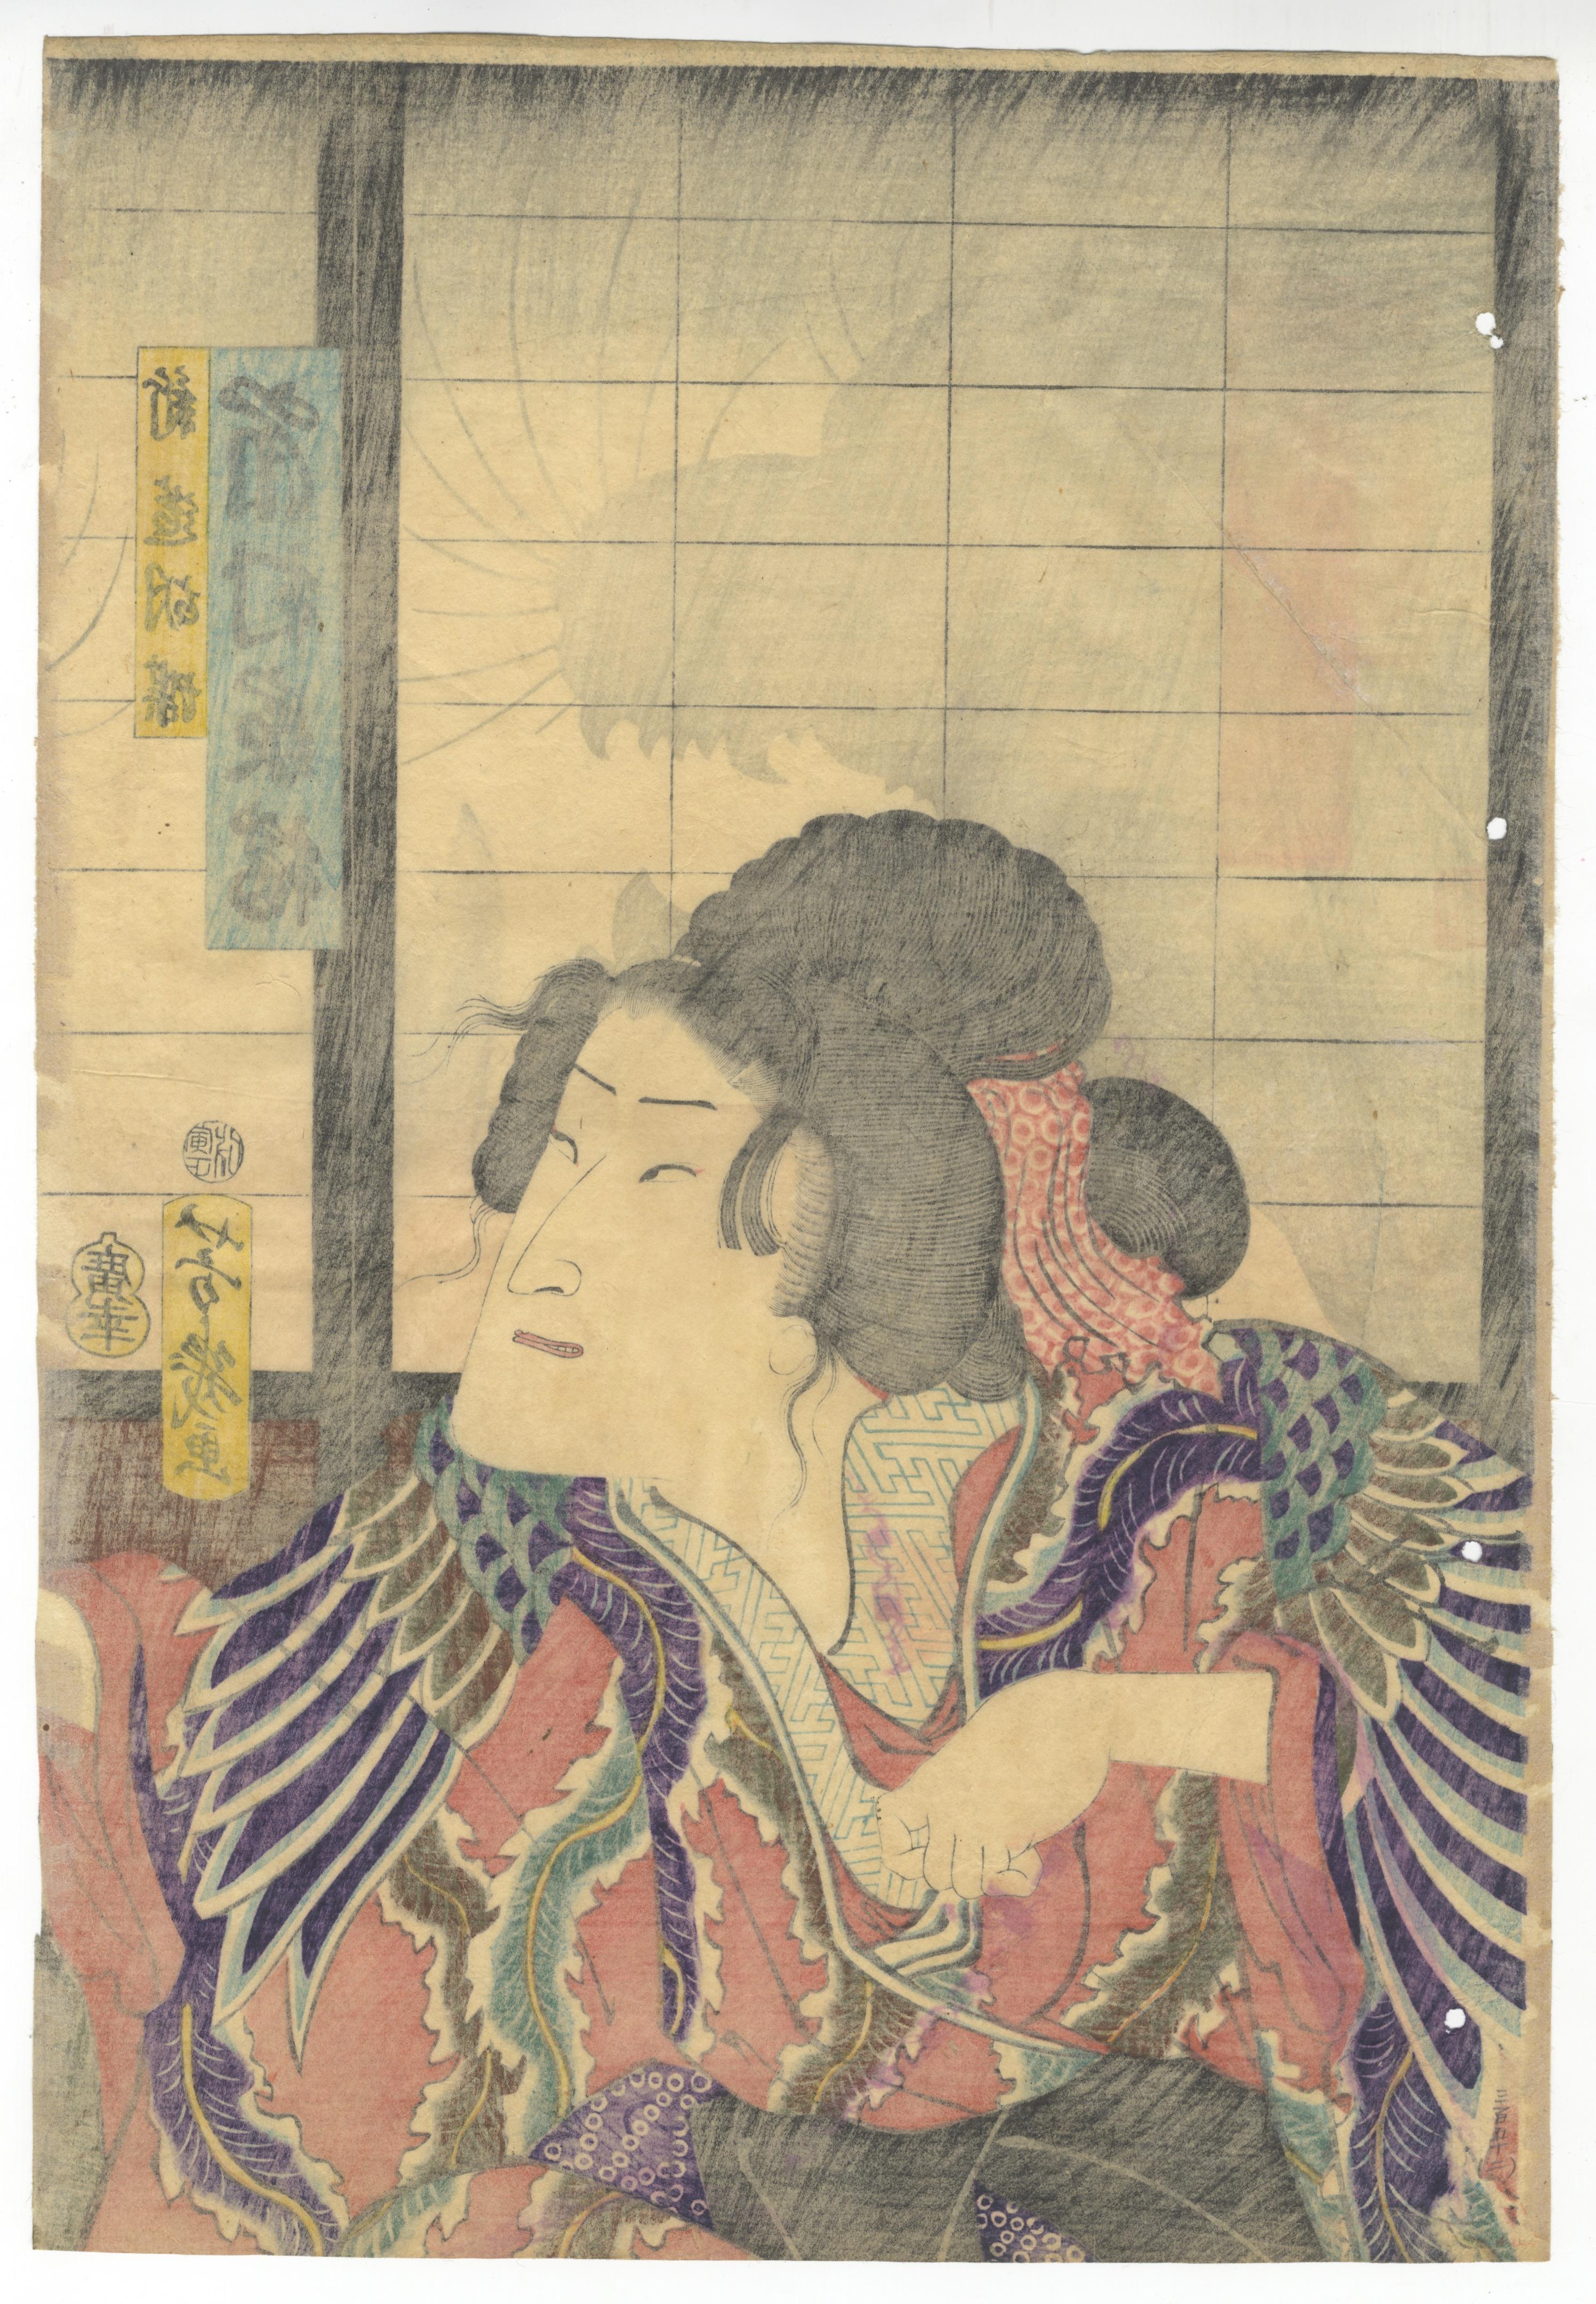 Japanese Utagawa Yoshiiku Kabuki Theater Play Triptych, Ghost, Shoji Screen, Kimono, Rats